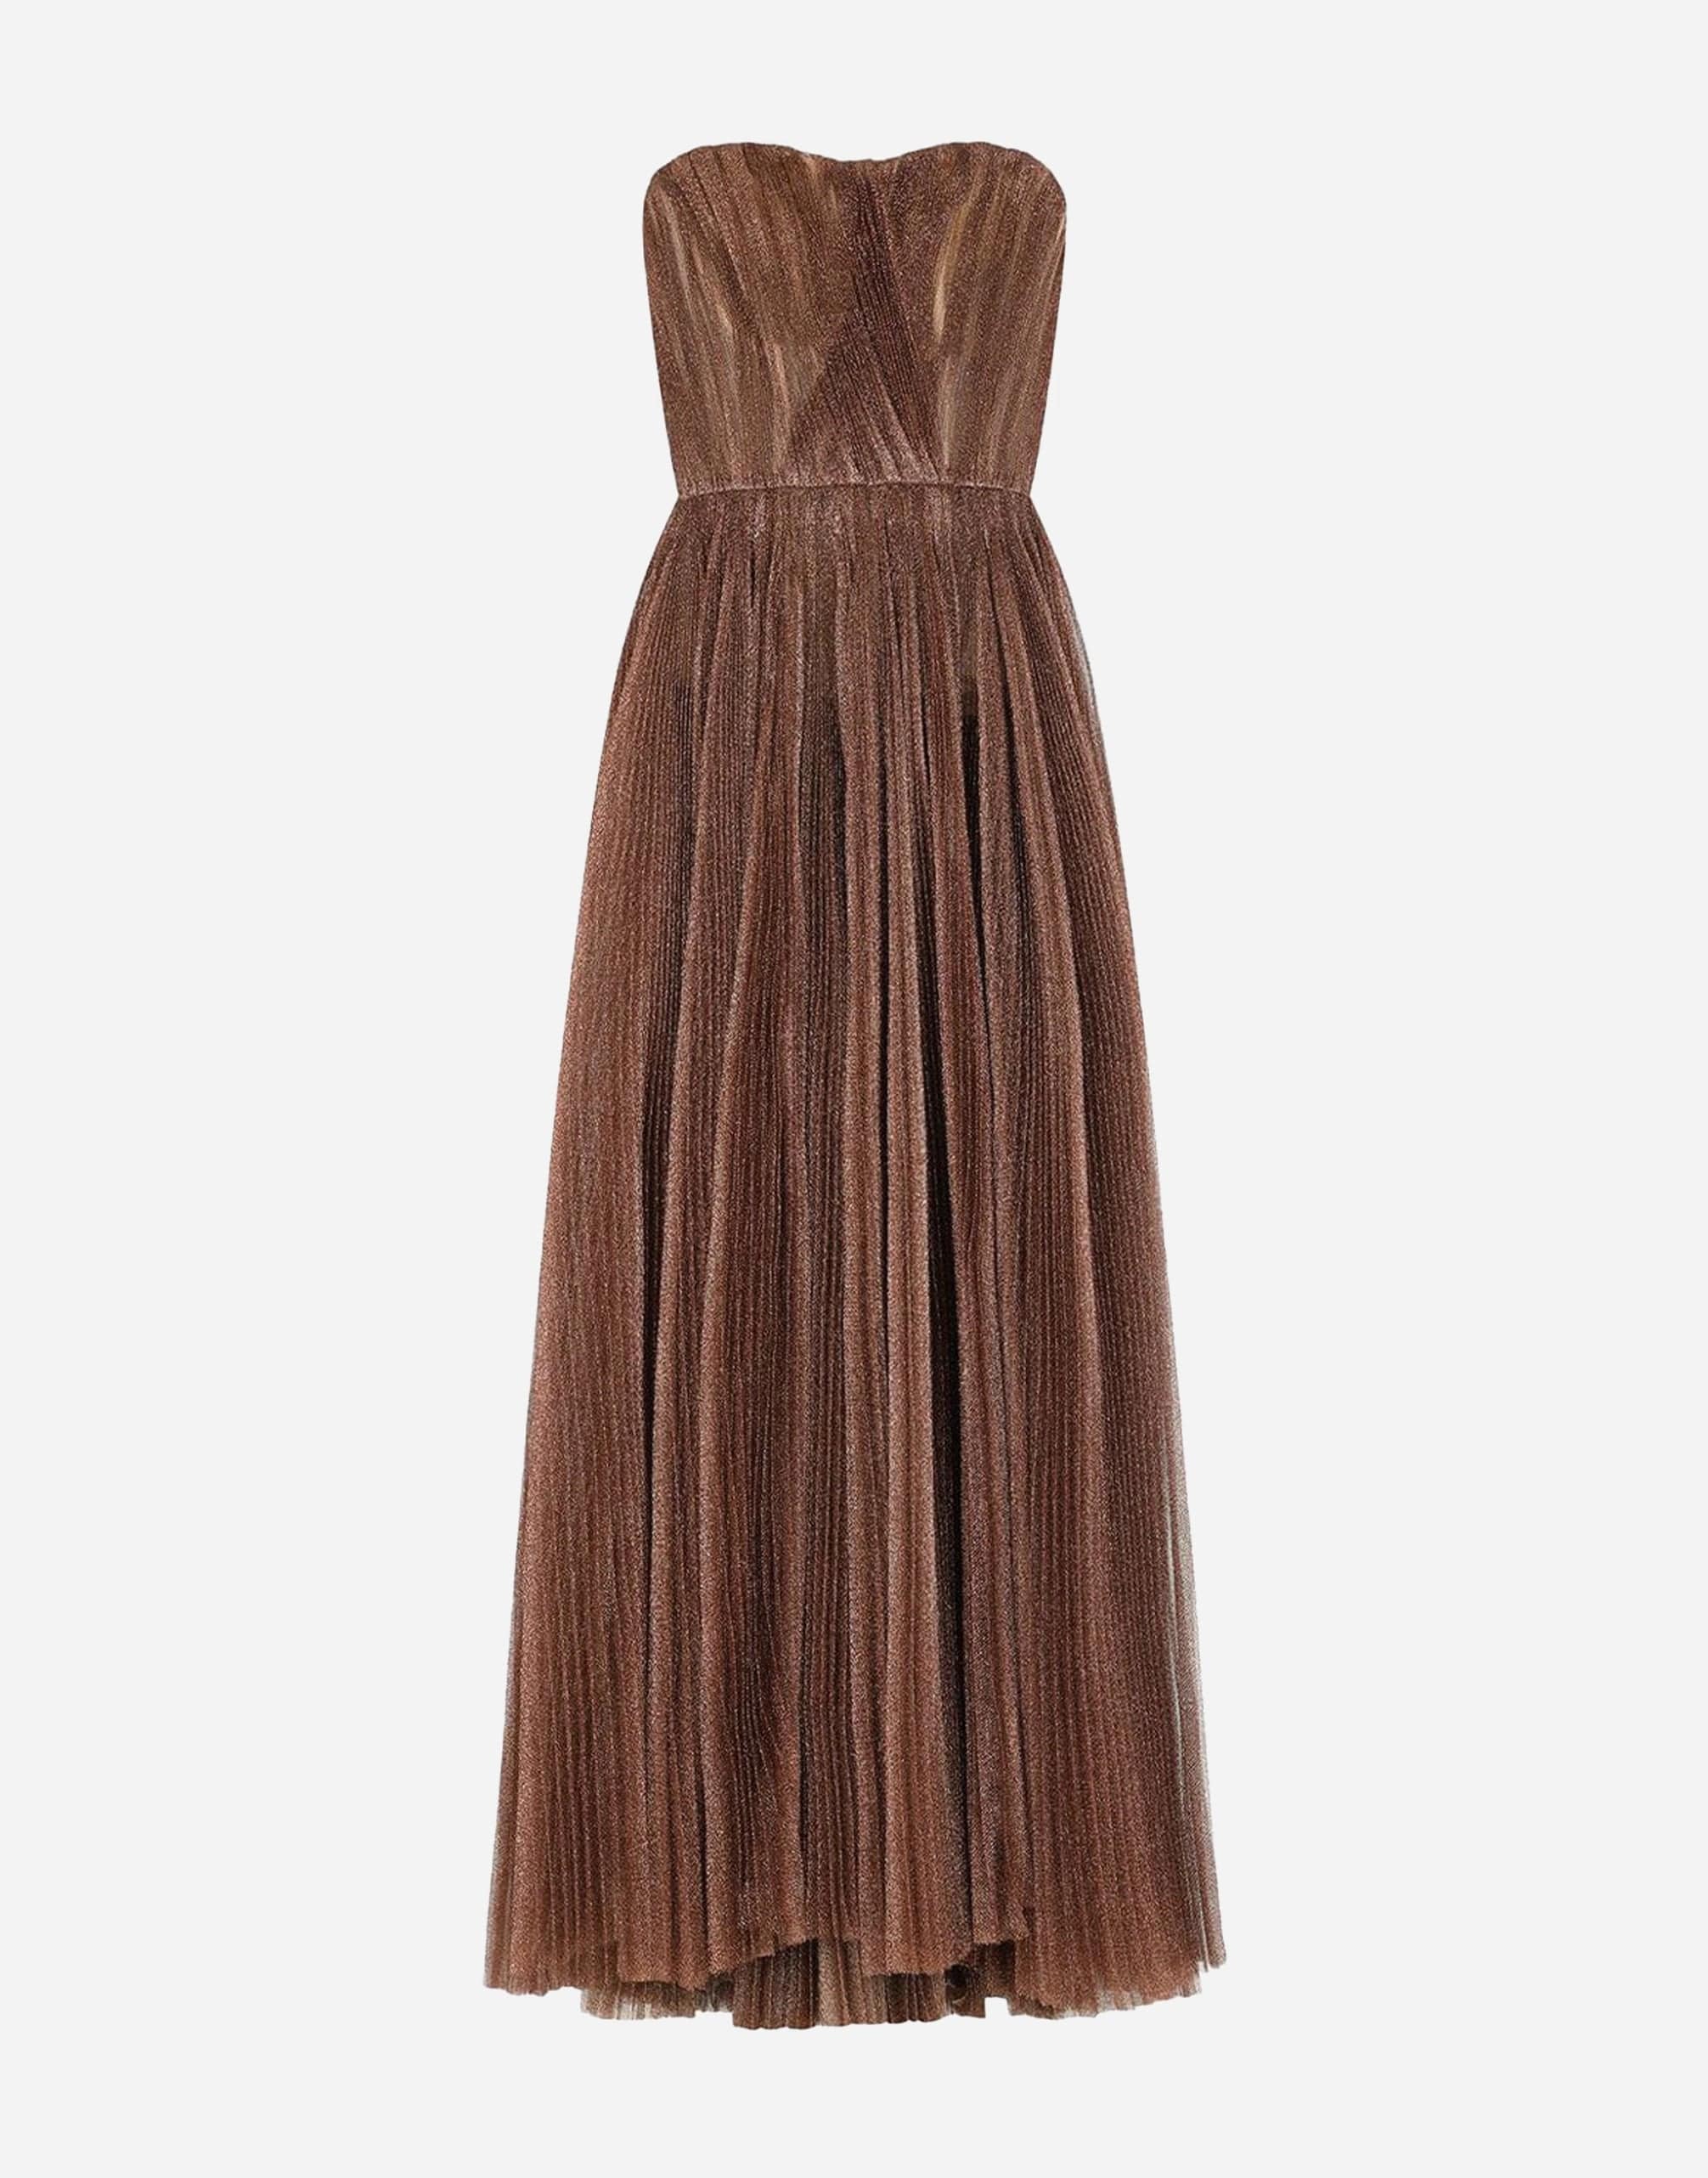 Dolce & Gabbana Metallic-Effect Long Dress